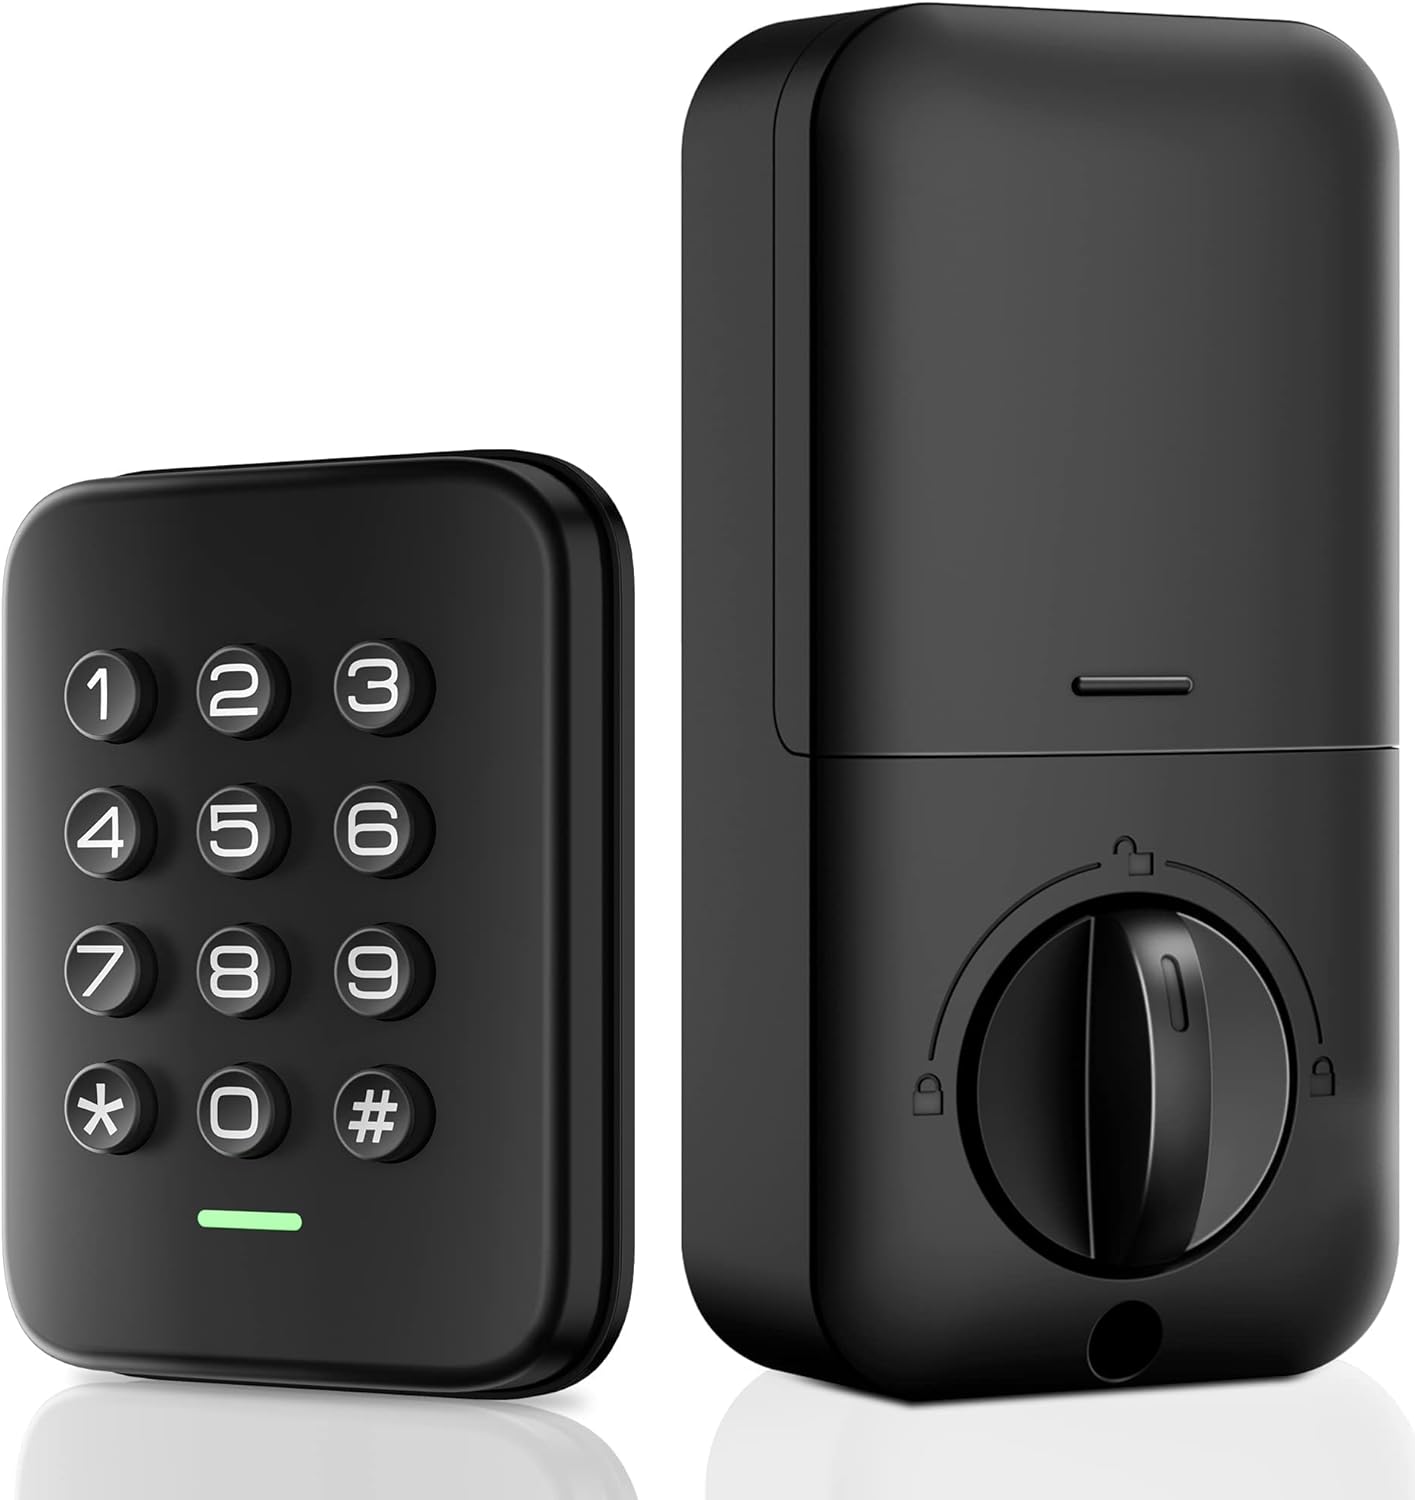 Veise VS01 Keyless Entry Door Lock, Electronic Keypad Deadbolt Lock, Auto Lock, Anti-Peeking Password Door Locks with Keypads, 1 Touch Locking & Easy Installation